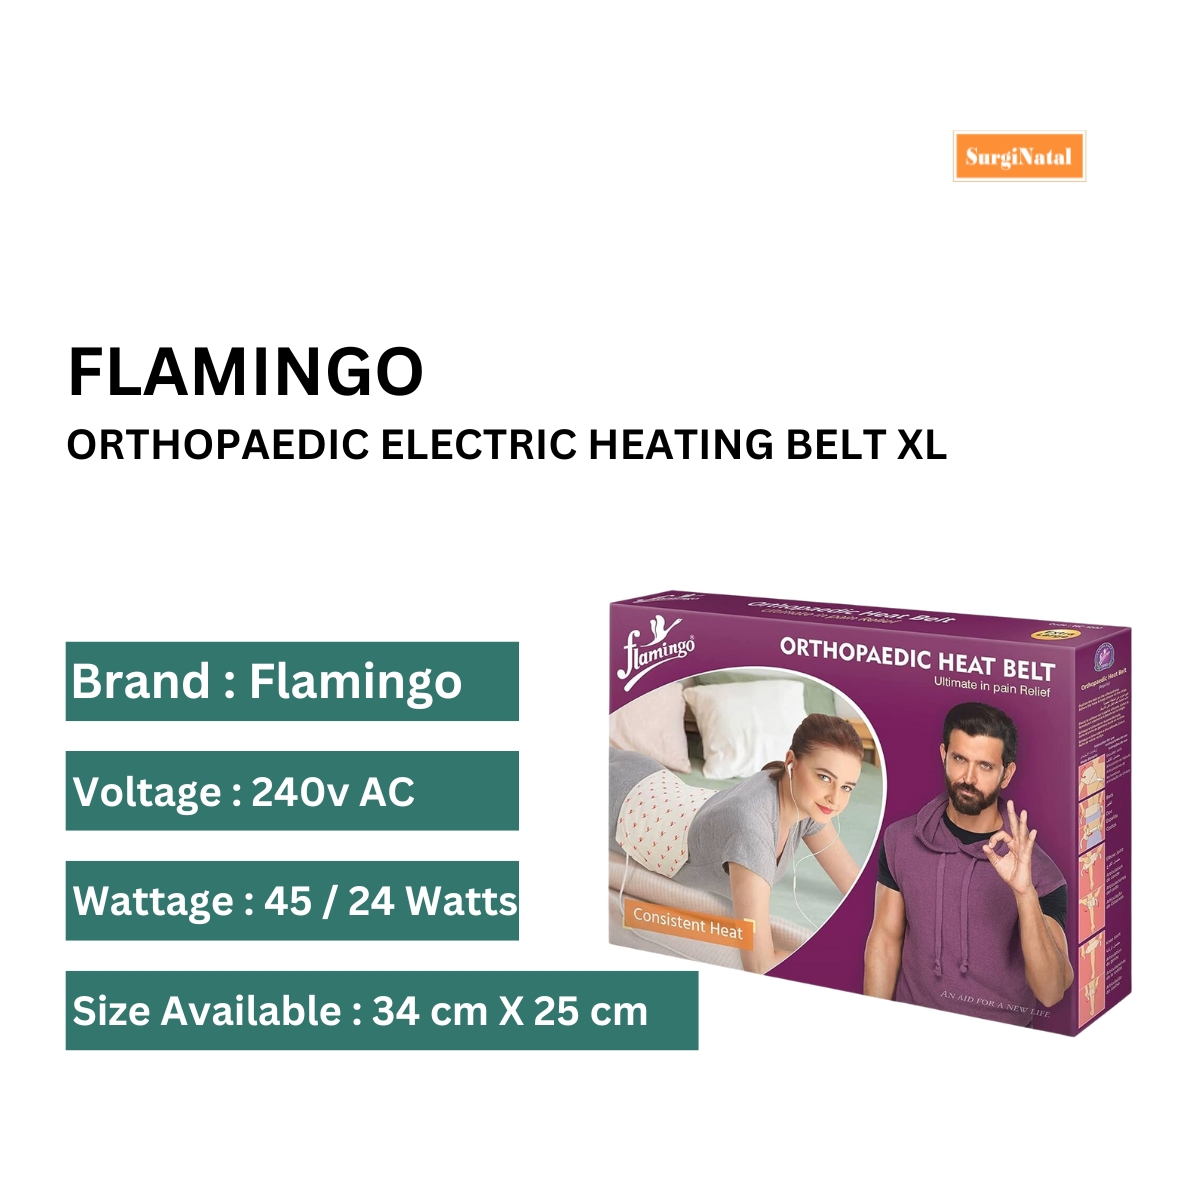 flamingo orthopaedic electric heating belt xl